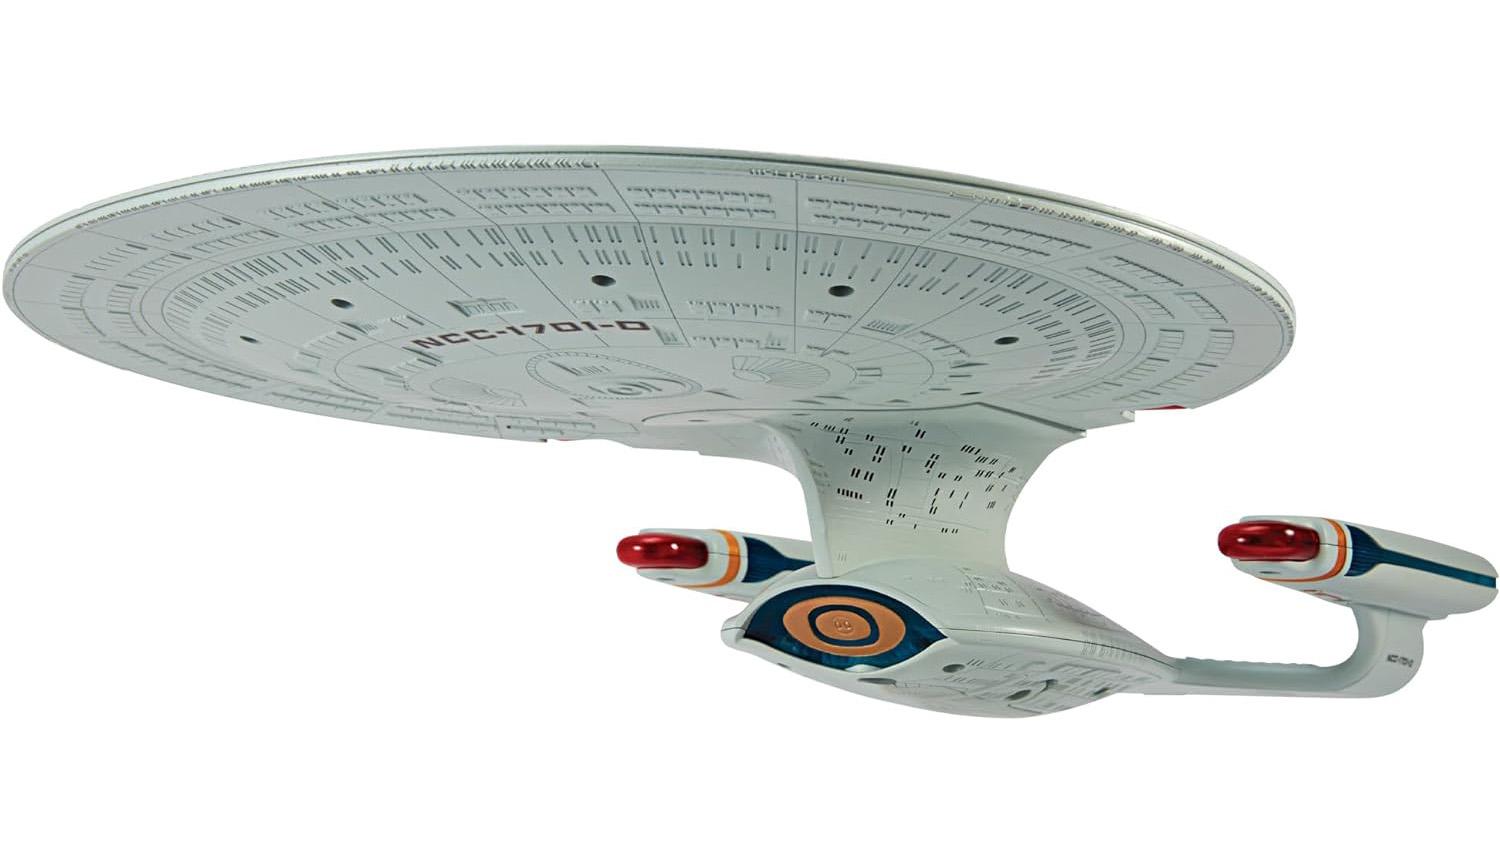 Playmates Star Trek Next Generation Starship Enterprise D for $23.99